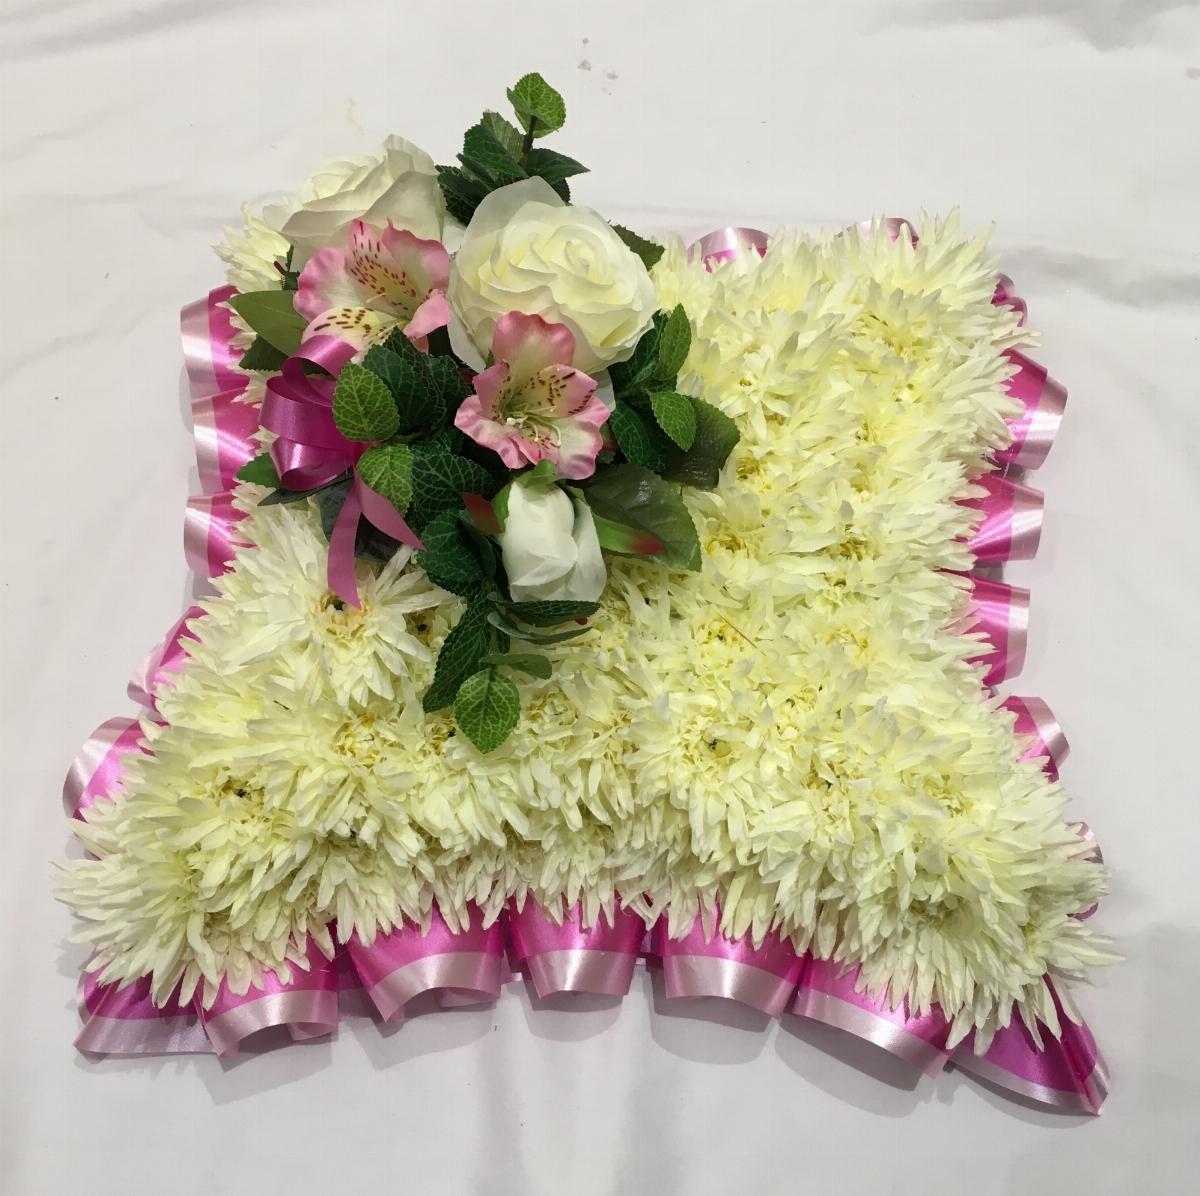 Chrysanthemum Cushion Funeral Tribute Two